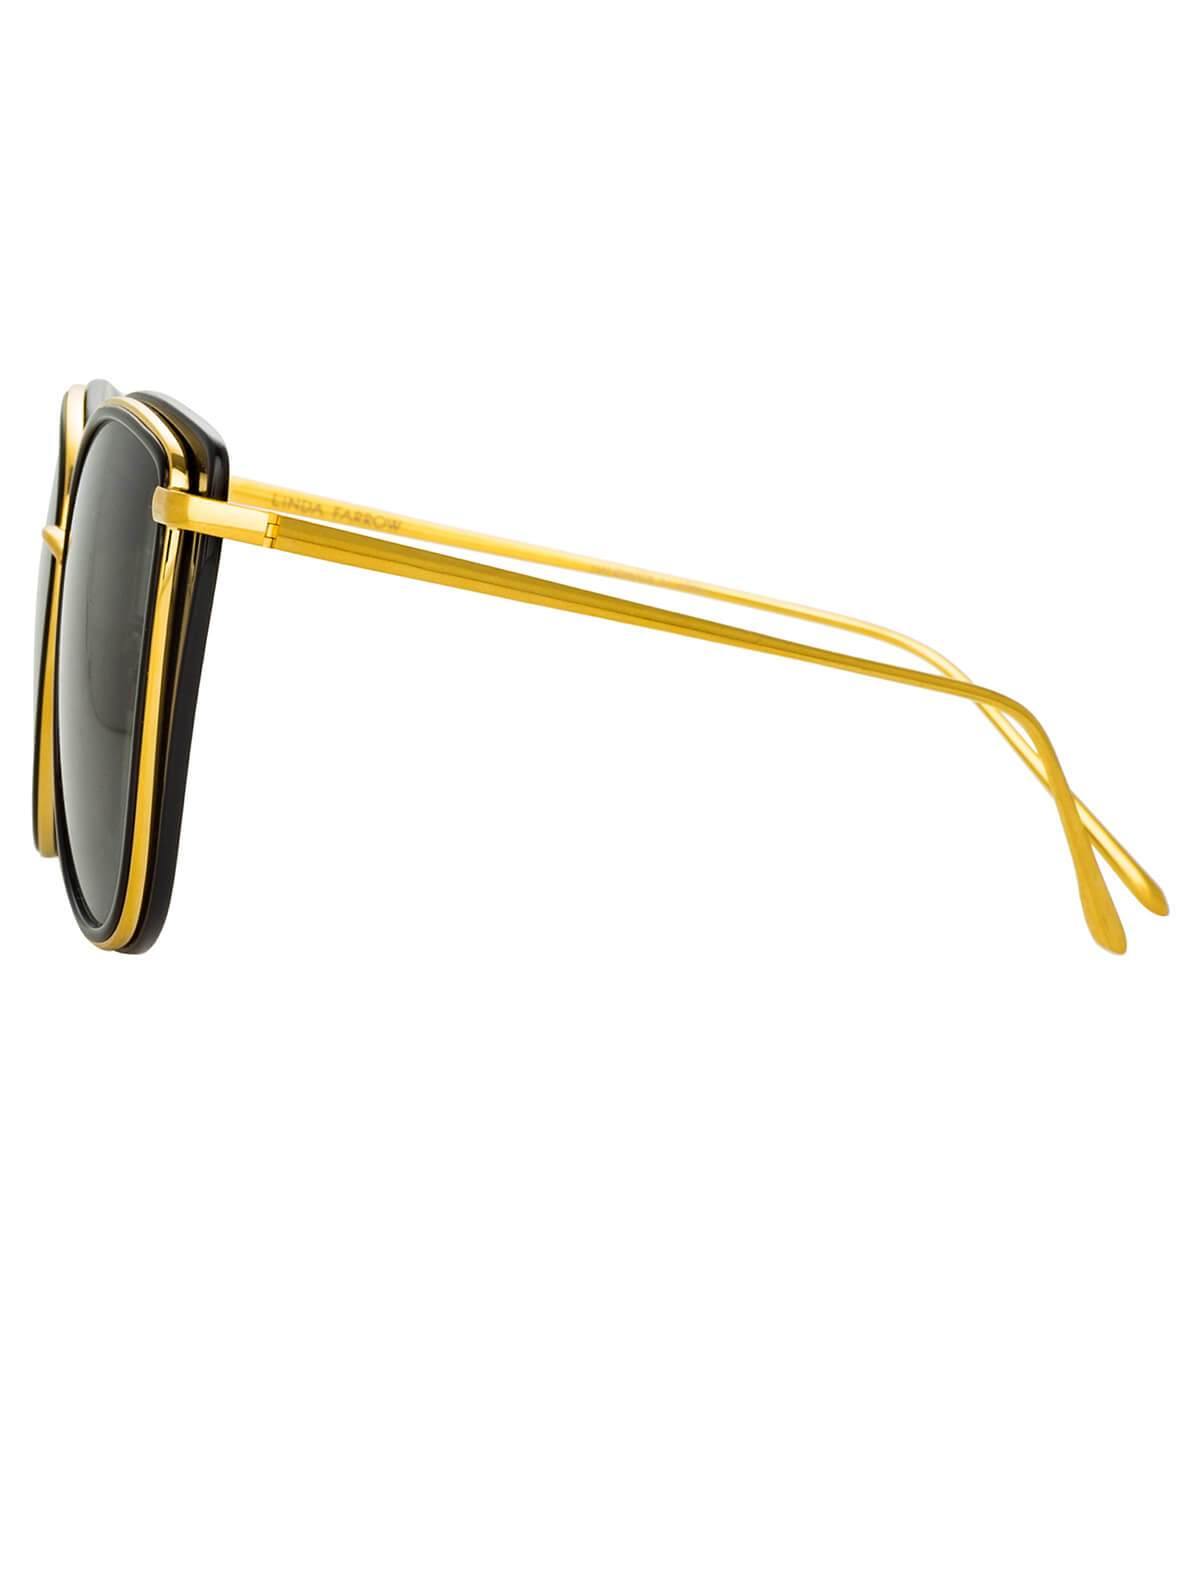 LINDA FARROW Liza Cat Eye Sunglasses In Black And 22-Carat Yellow Gold | CLOSET Singapore